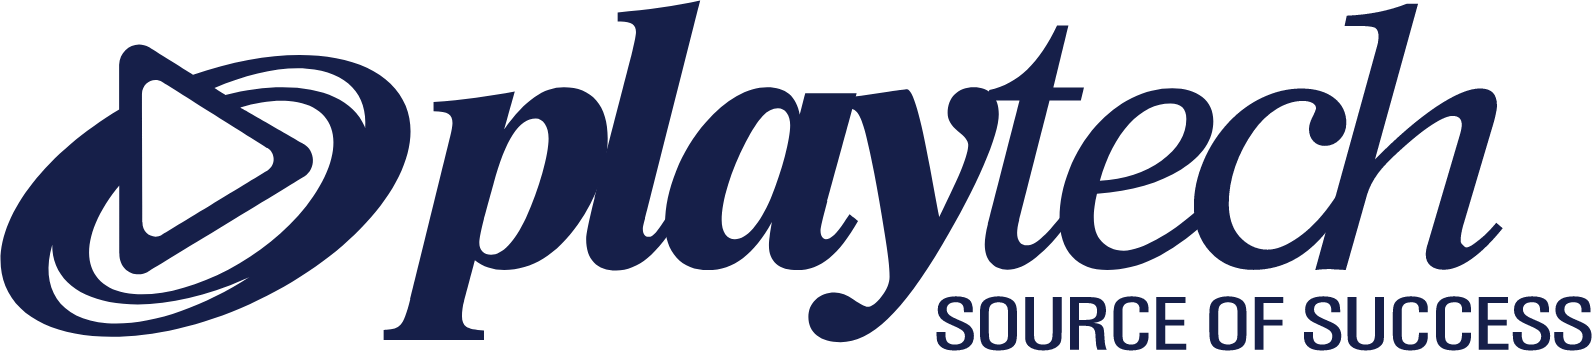 Playtech logo large (transparent PNG)